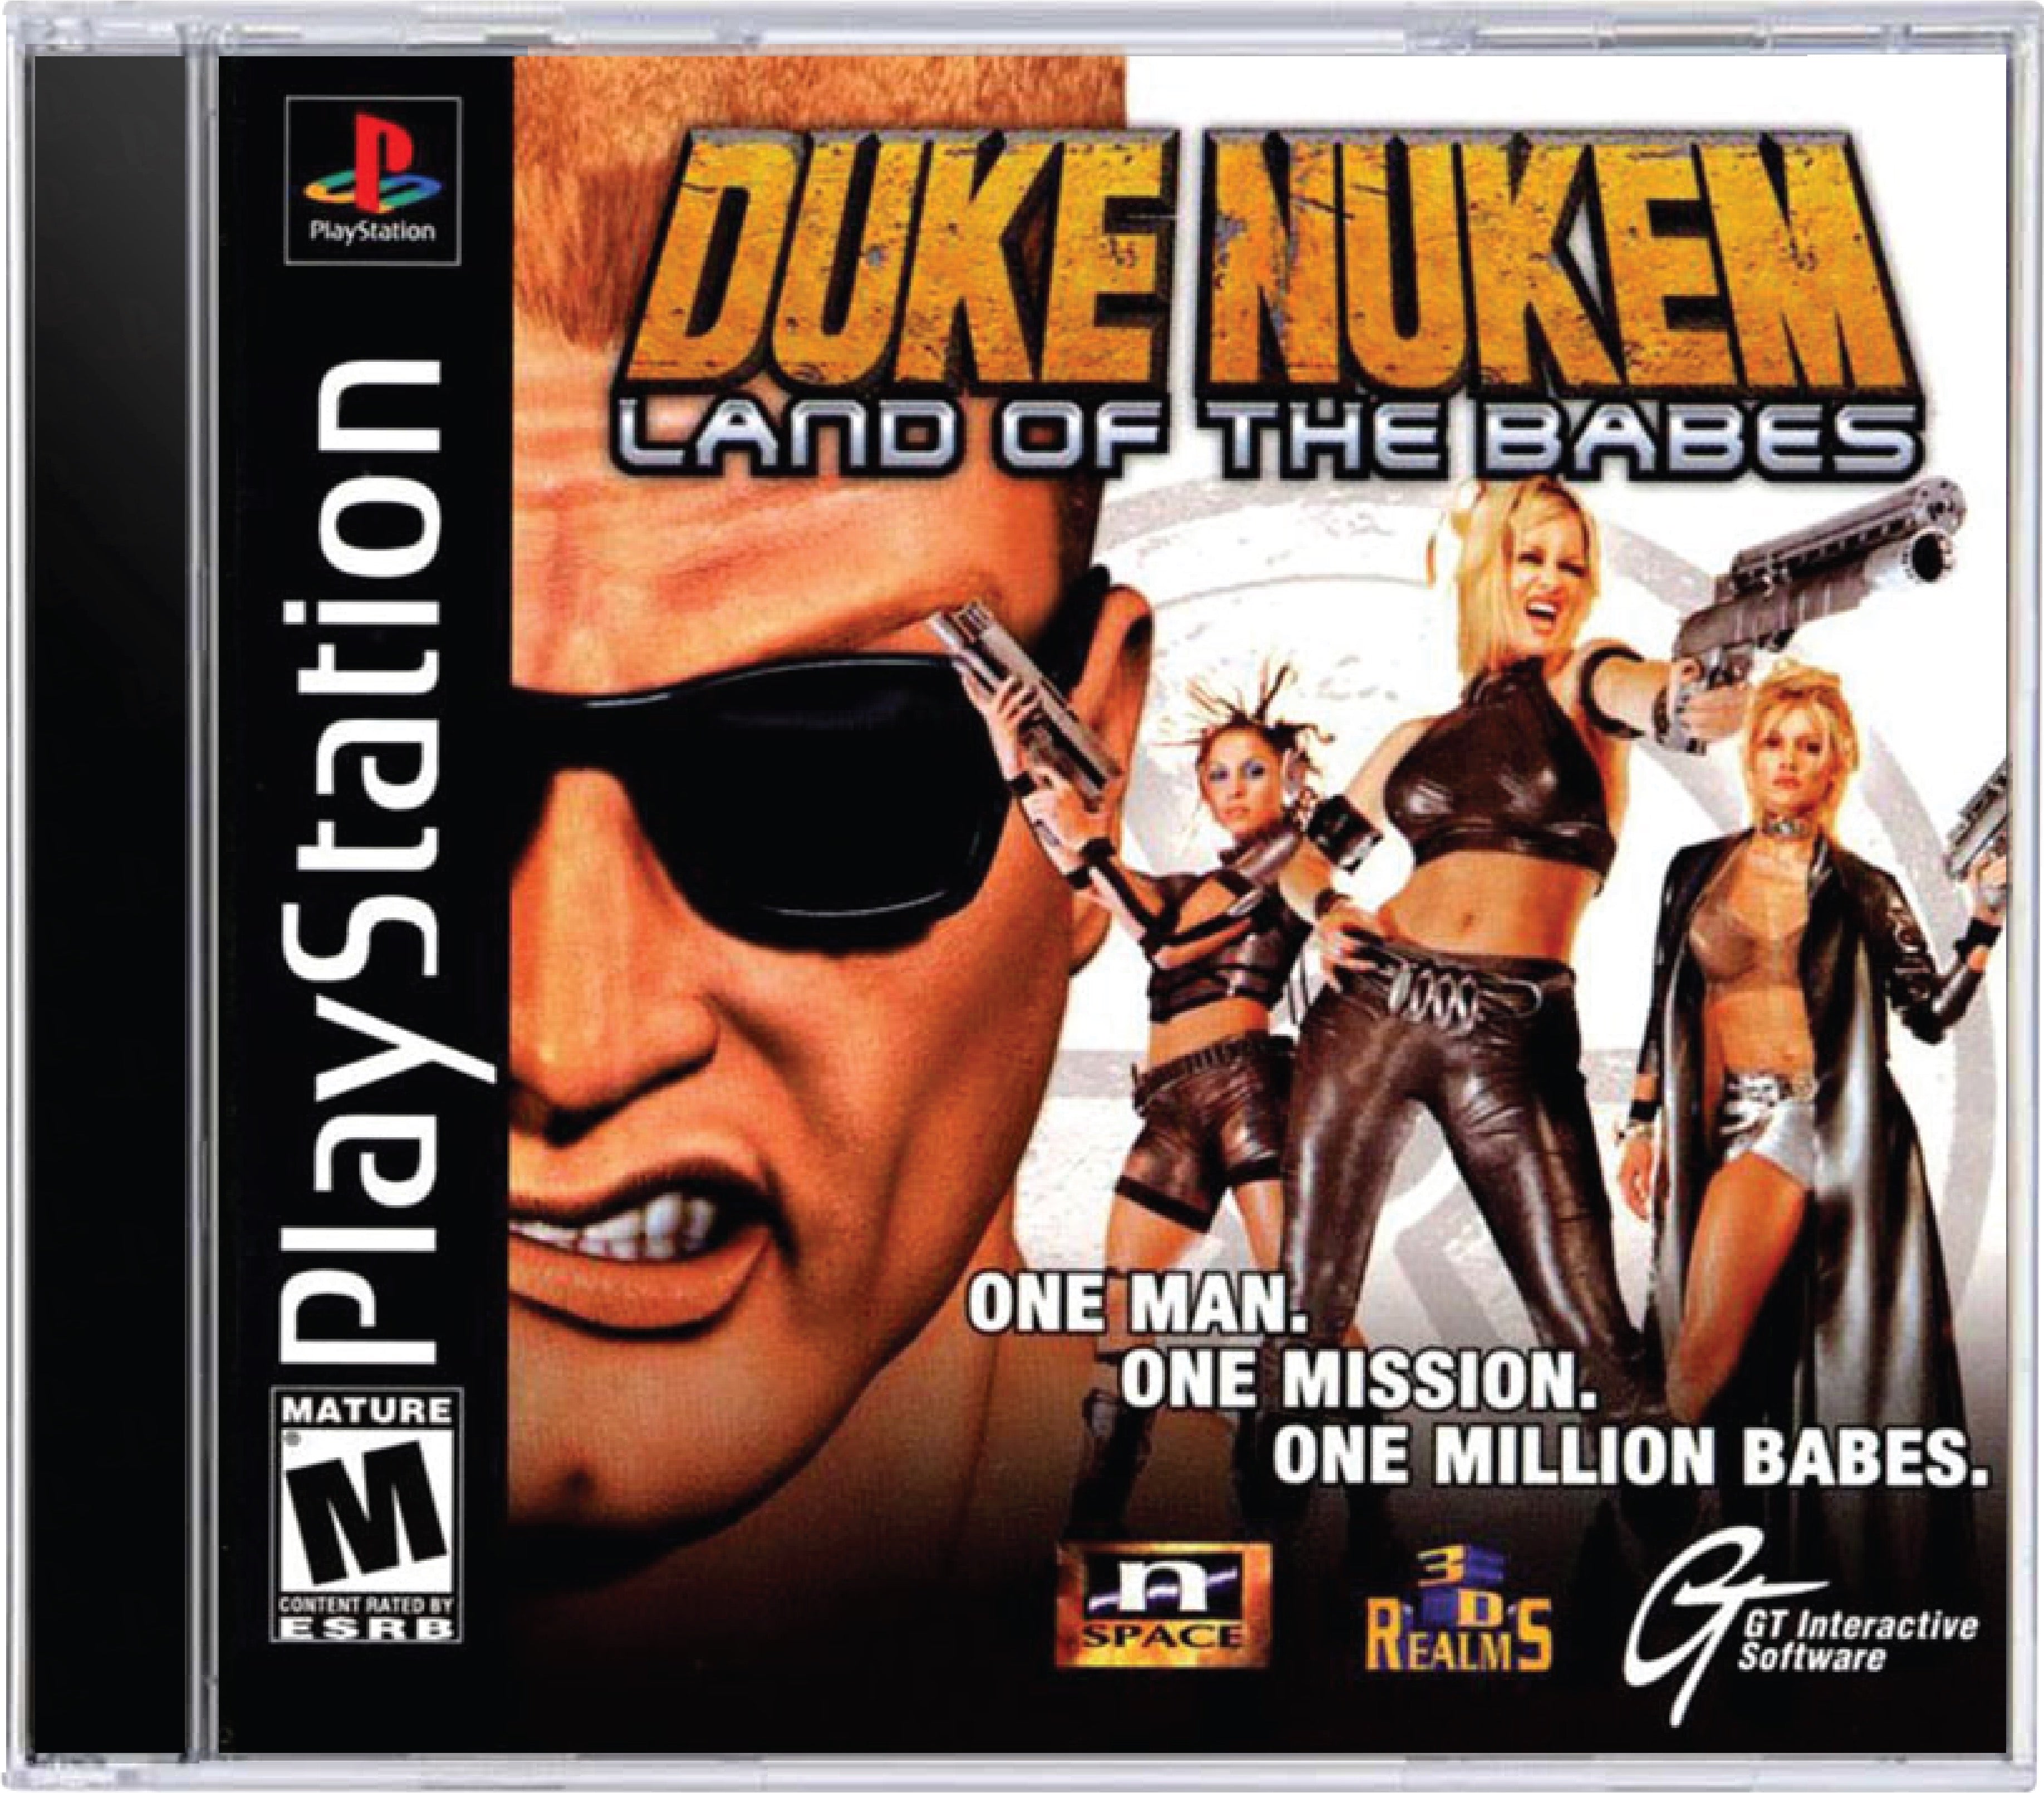 Duke Nukem Land of the Babes Cover Art and Product Photo